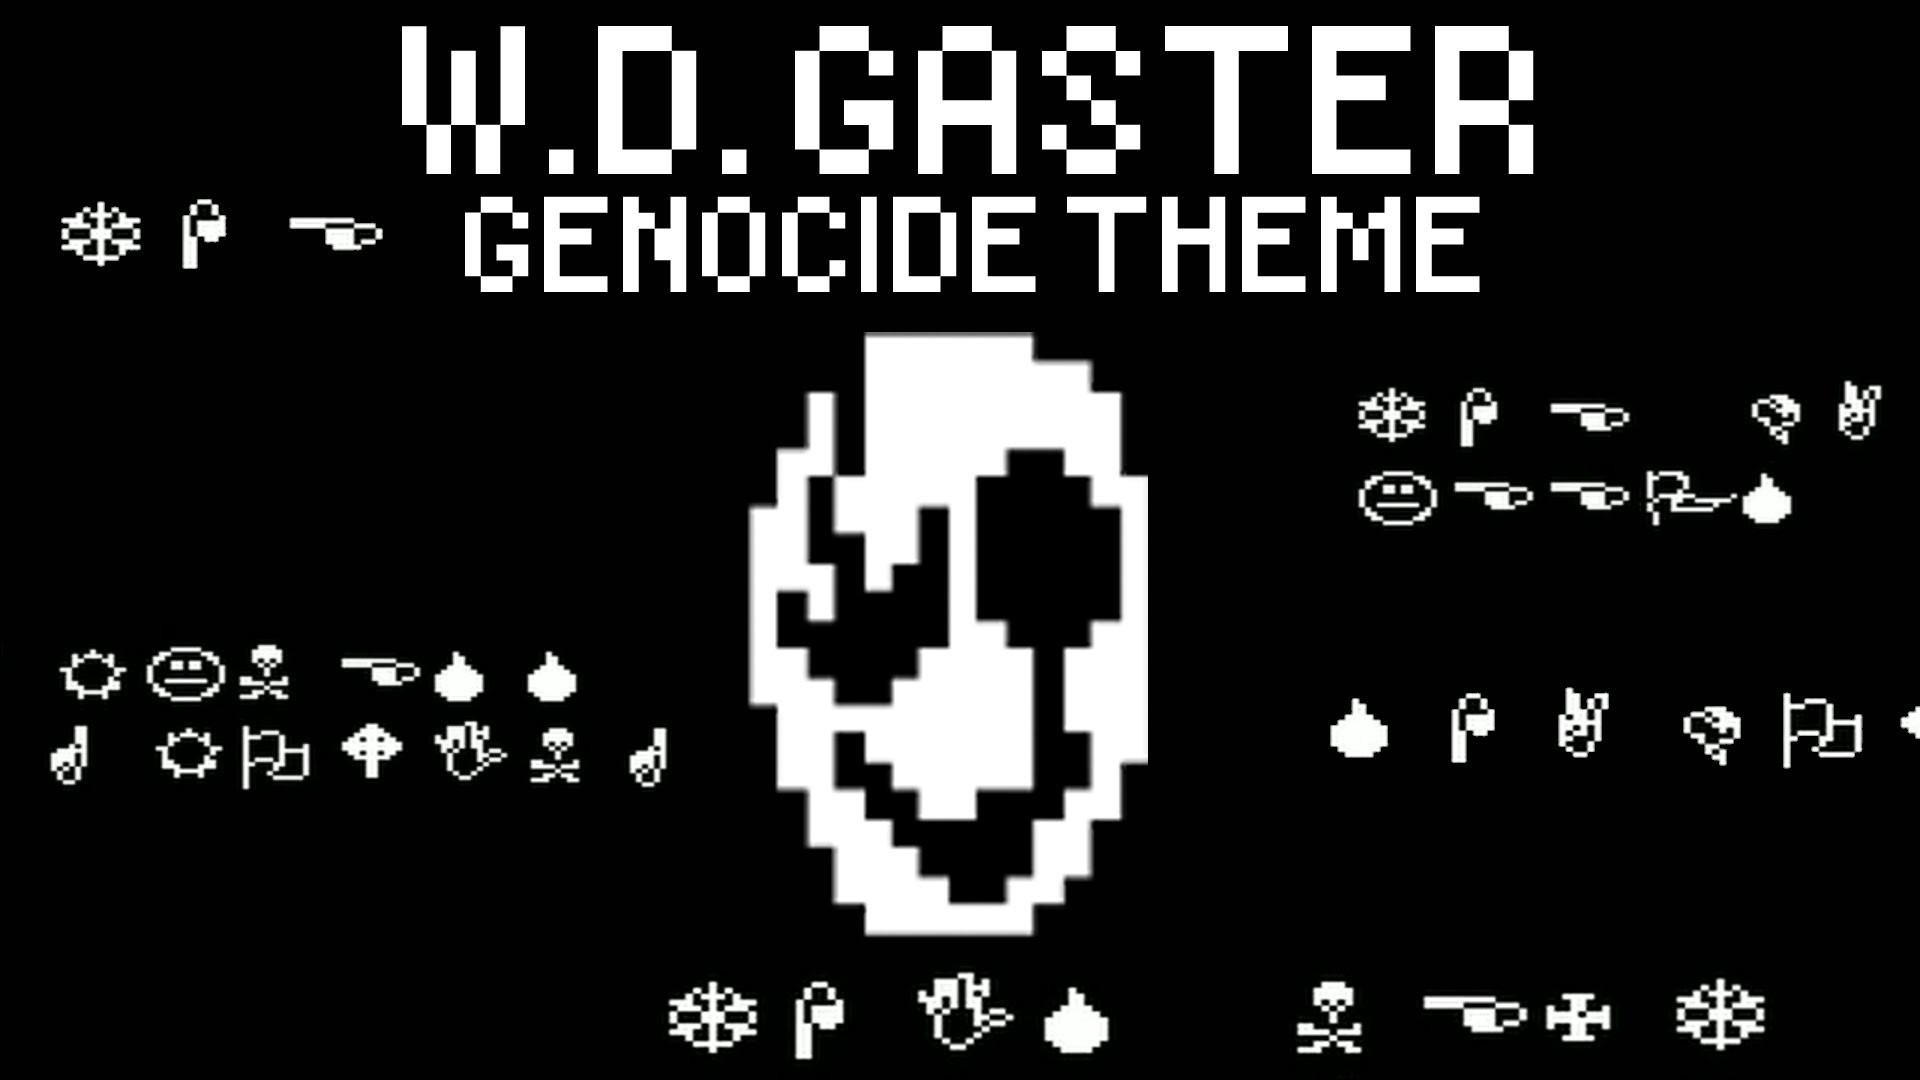 HellkiteUndertale – W.D. GASTER Genocide Theme – YouTube